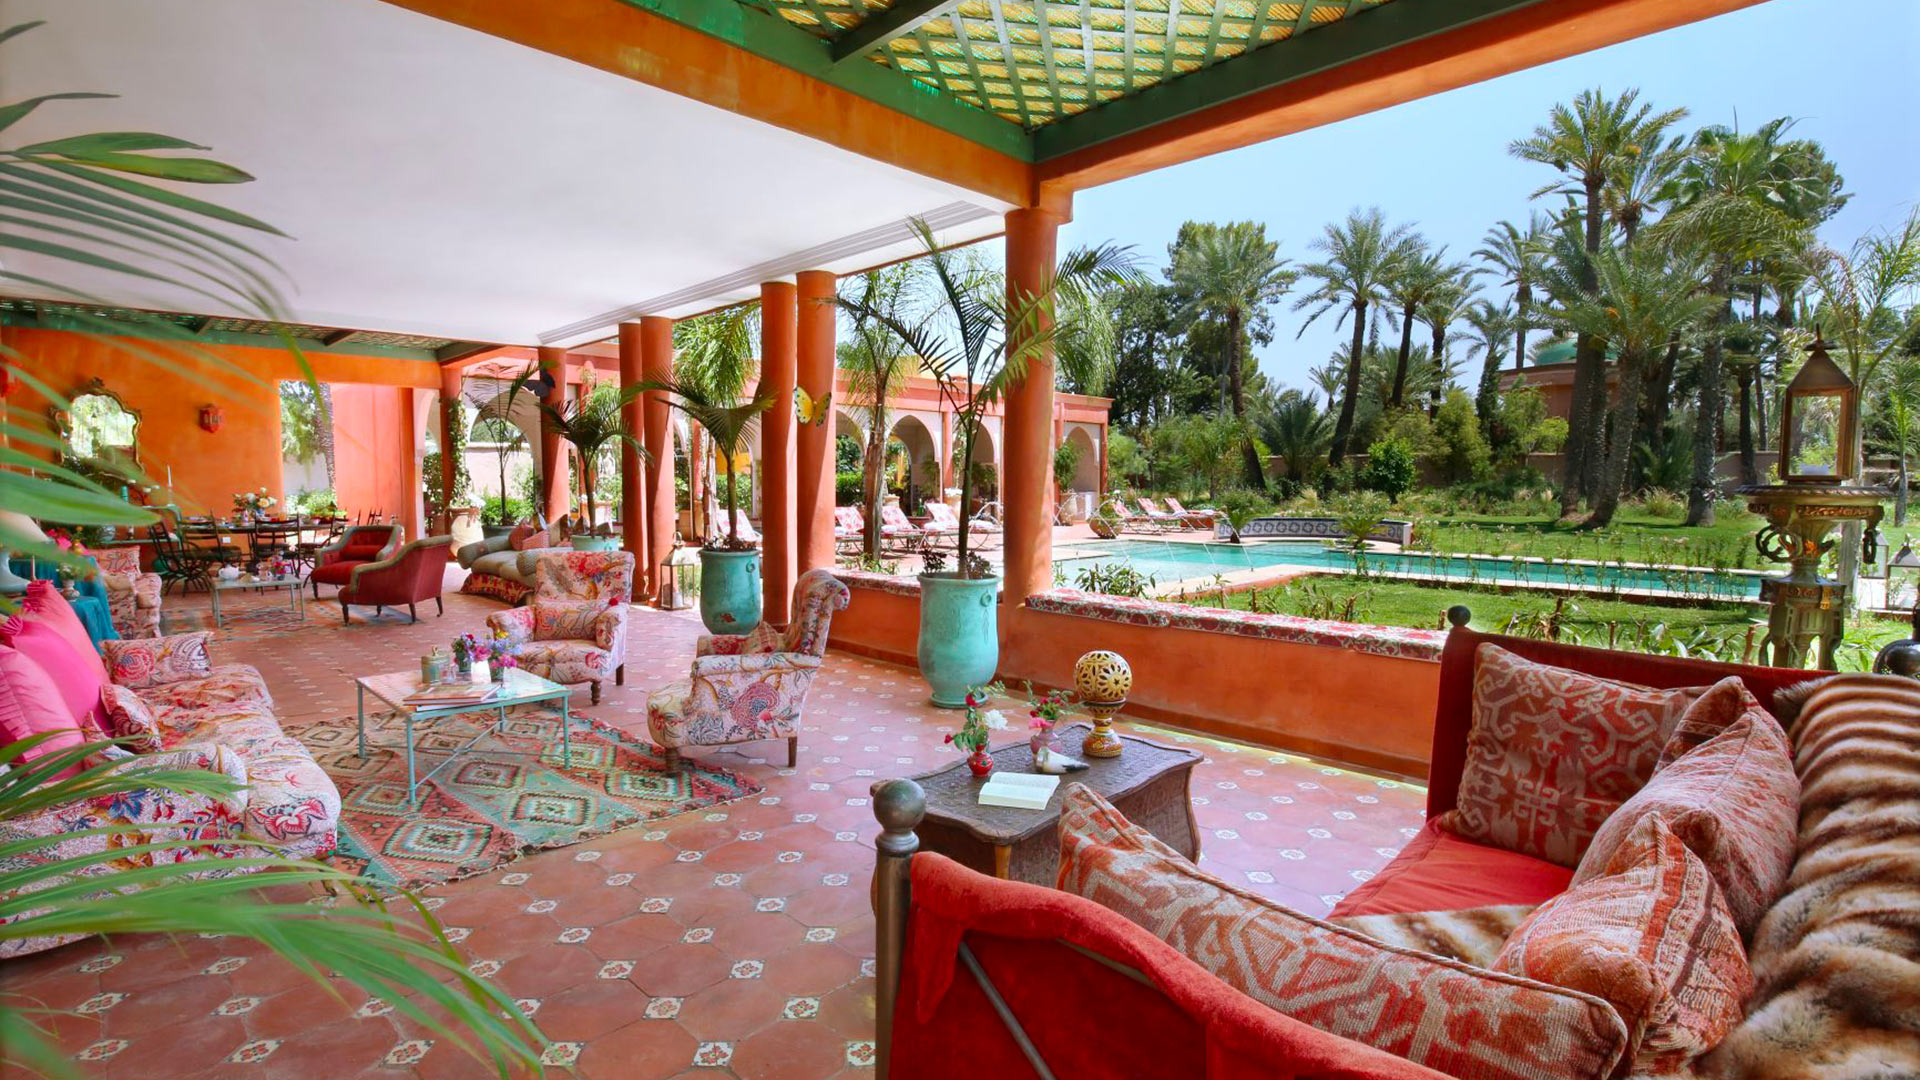 Villa Villa Onolu, Rental in Marrakech